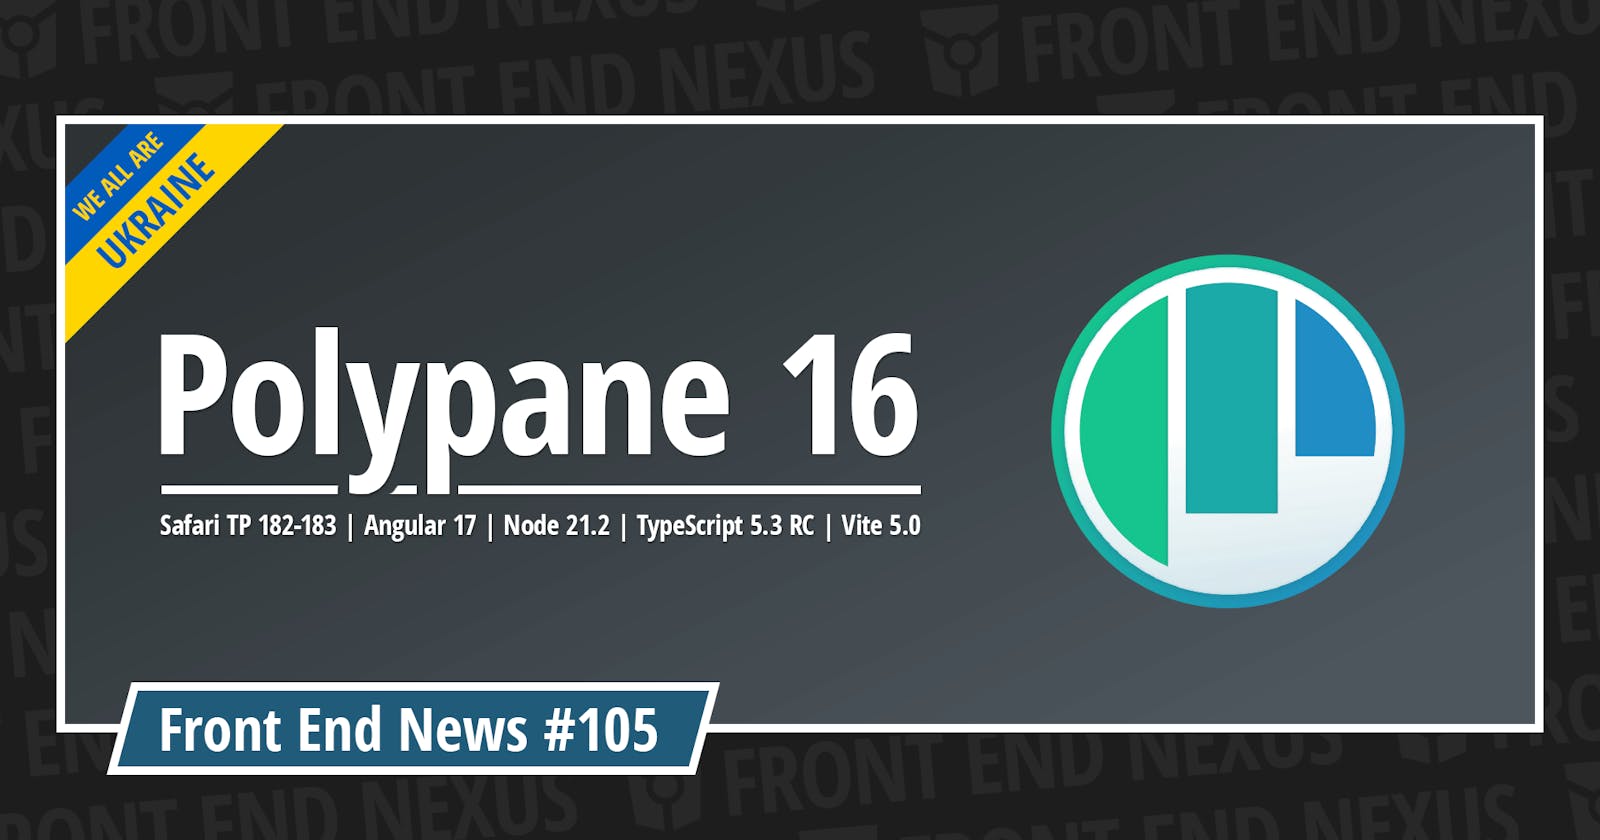 Polypane 16, Safari TP 182-183, Angular 17, Node 21.2, TypeScript 5.3 RC, Vite 5.0, and more | Front End News #105